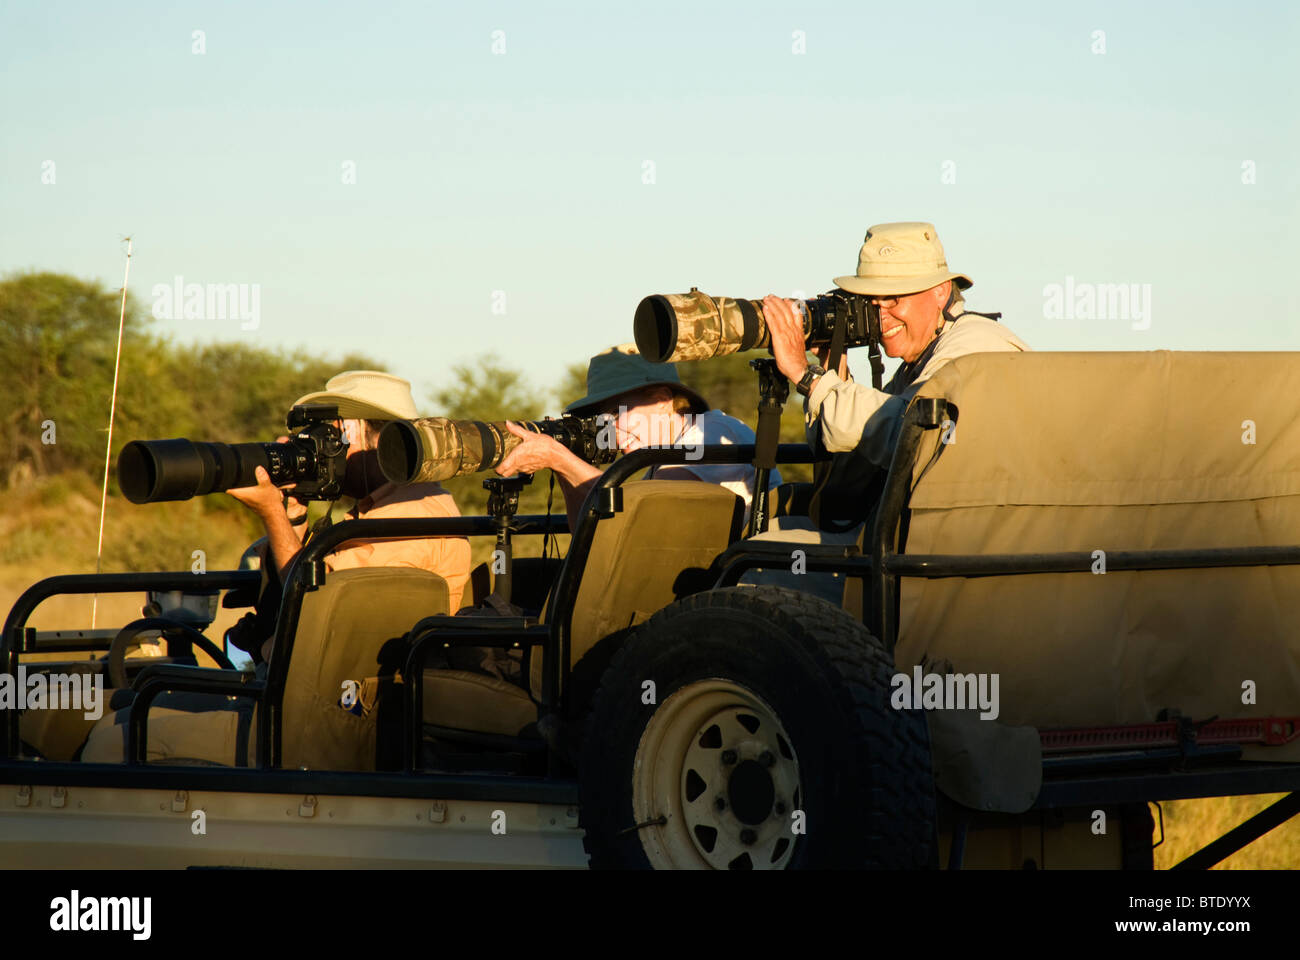 Tourists in safari vehicle taking photographs Stock Photo